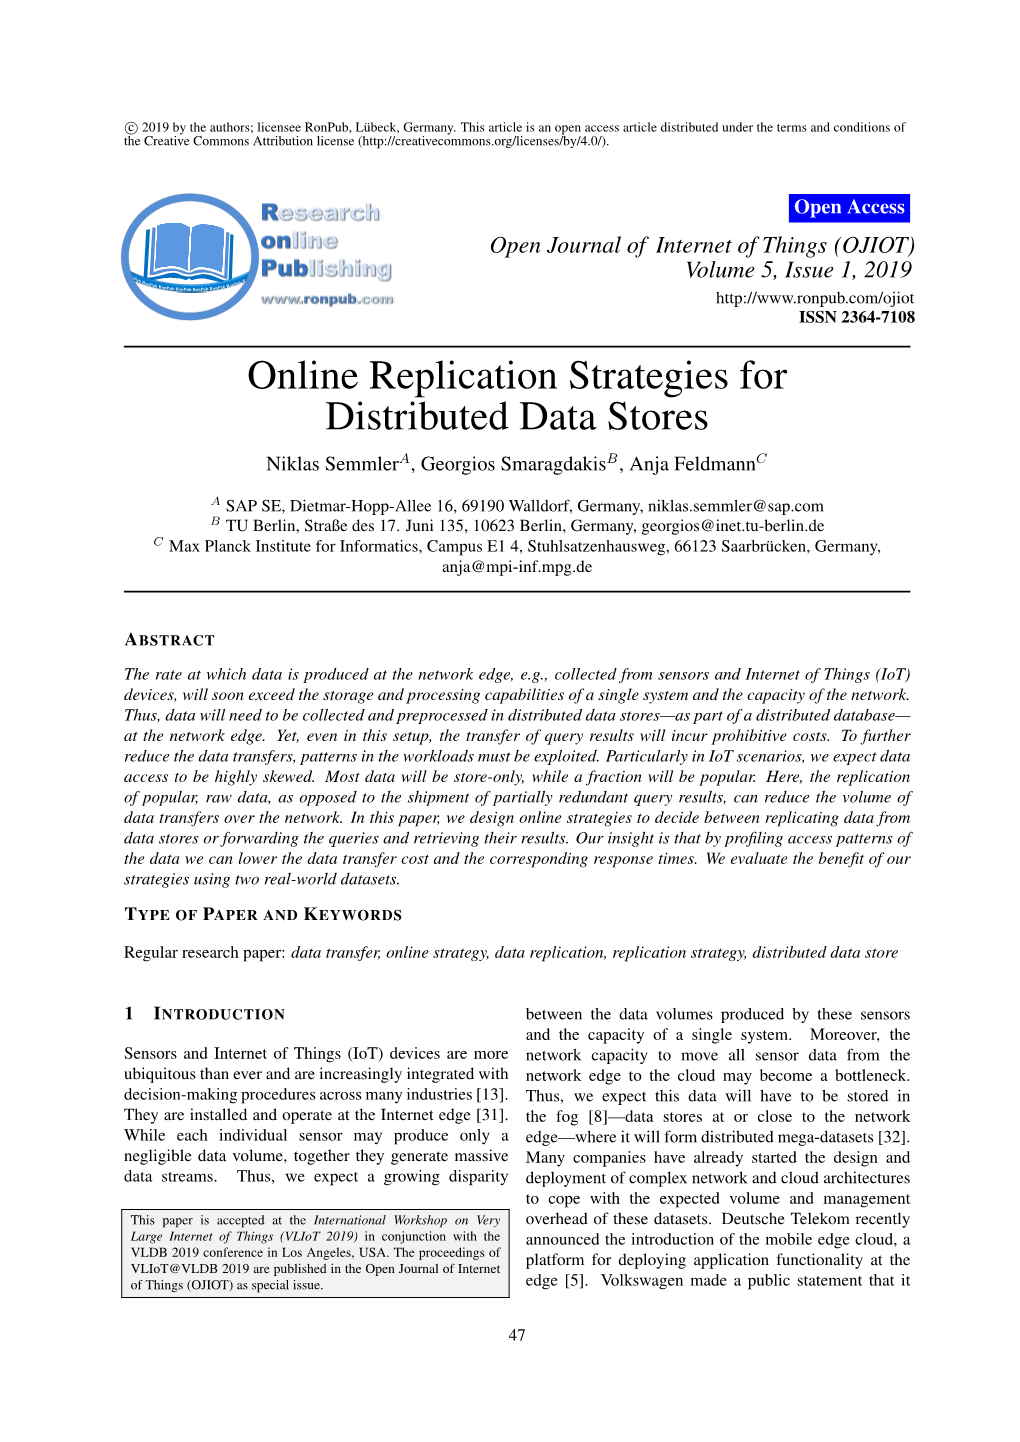 Online Replication Strategies for Distributed Data Stores Niklas Semmlera, Georgios Smaragdakisb, Anja Feldmannc